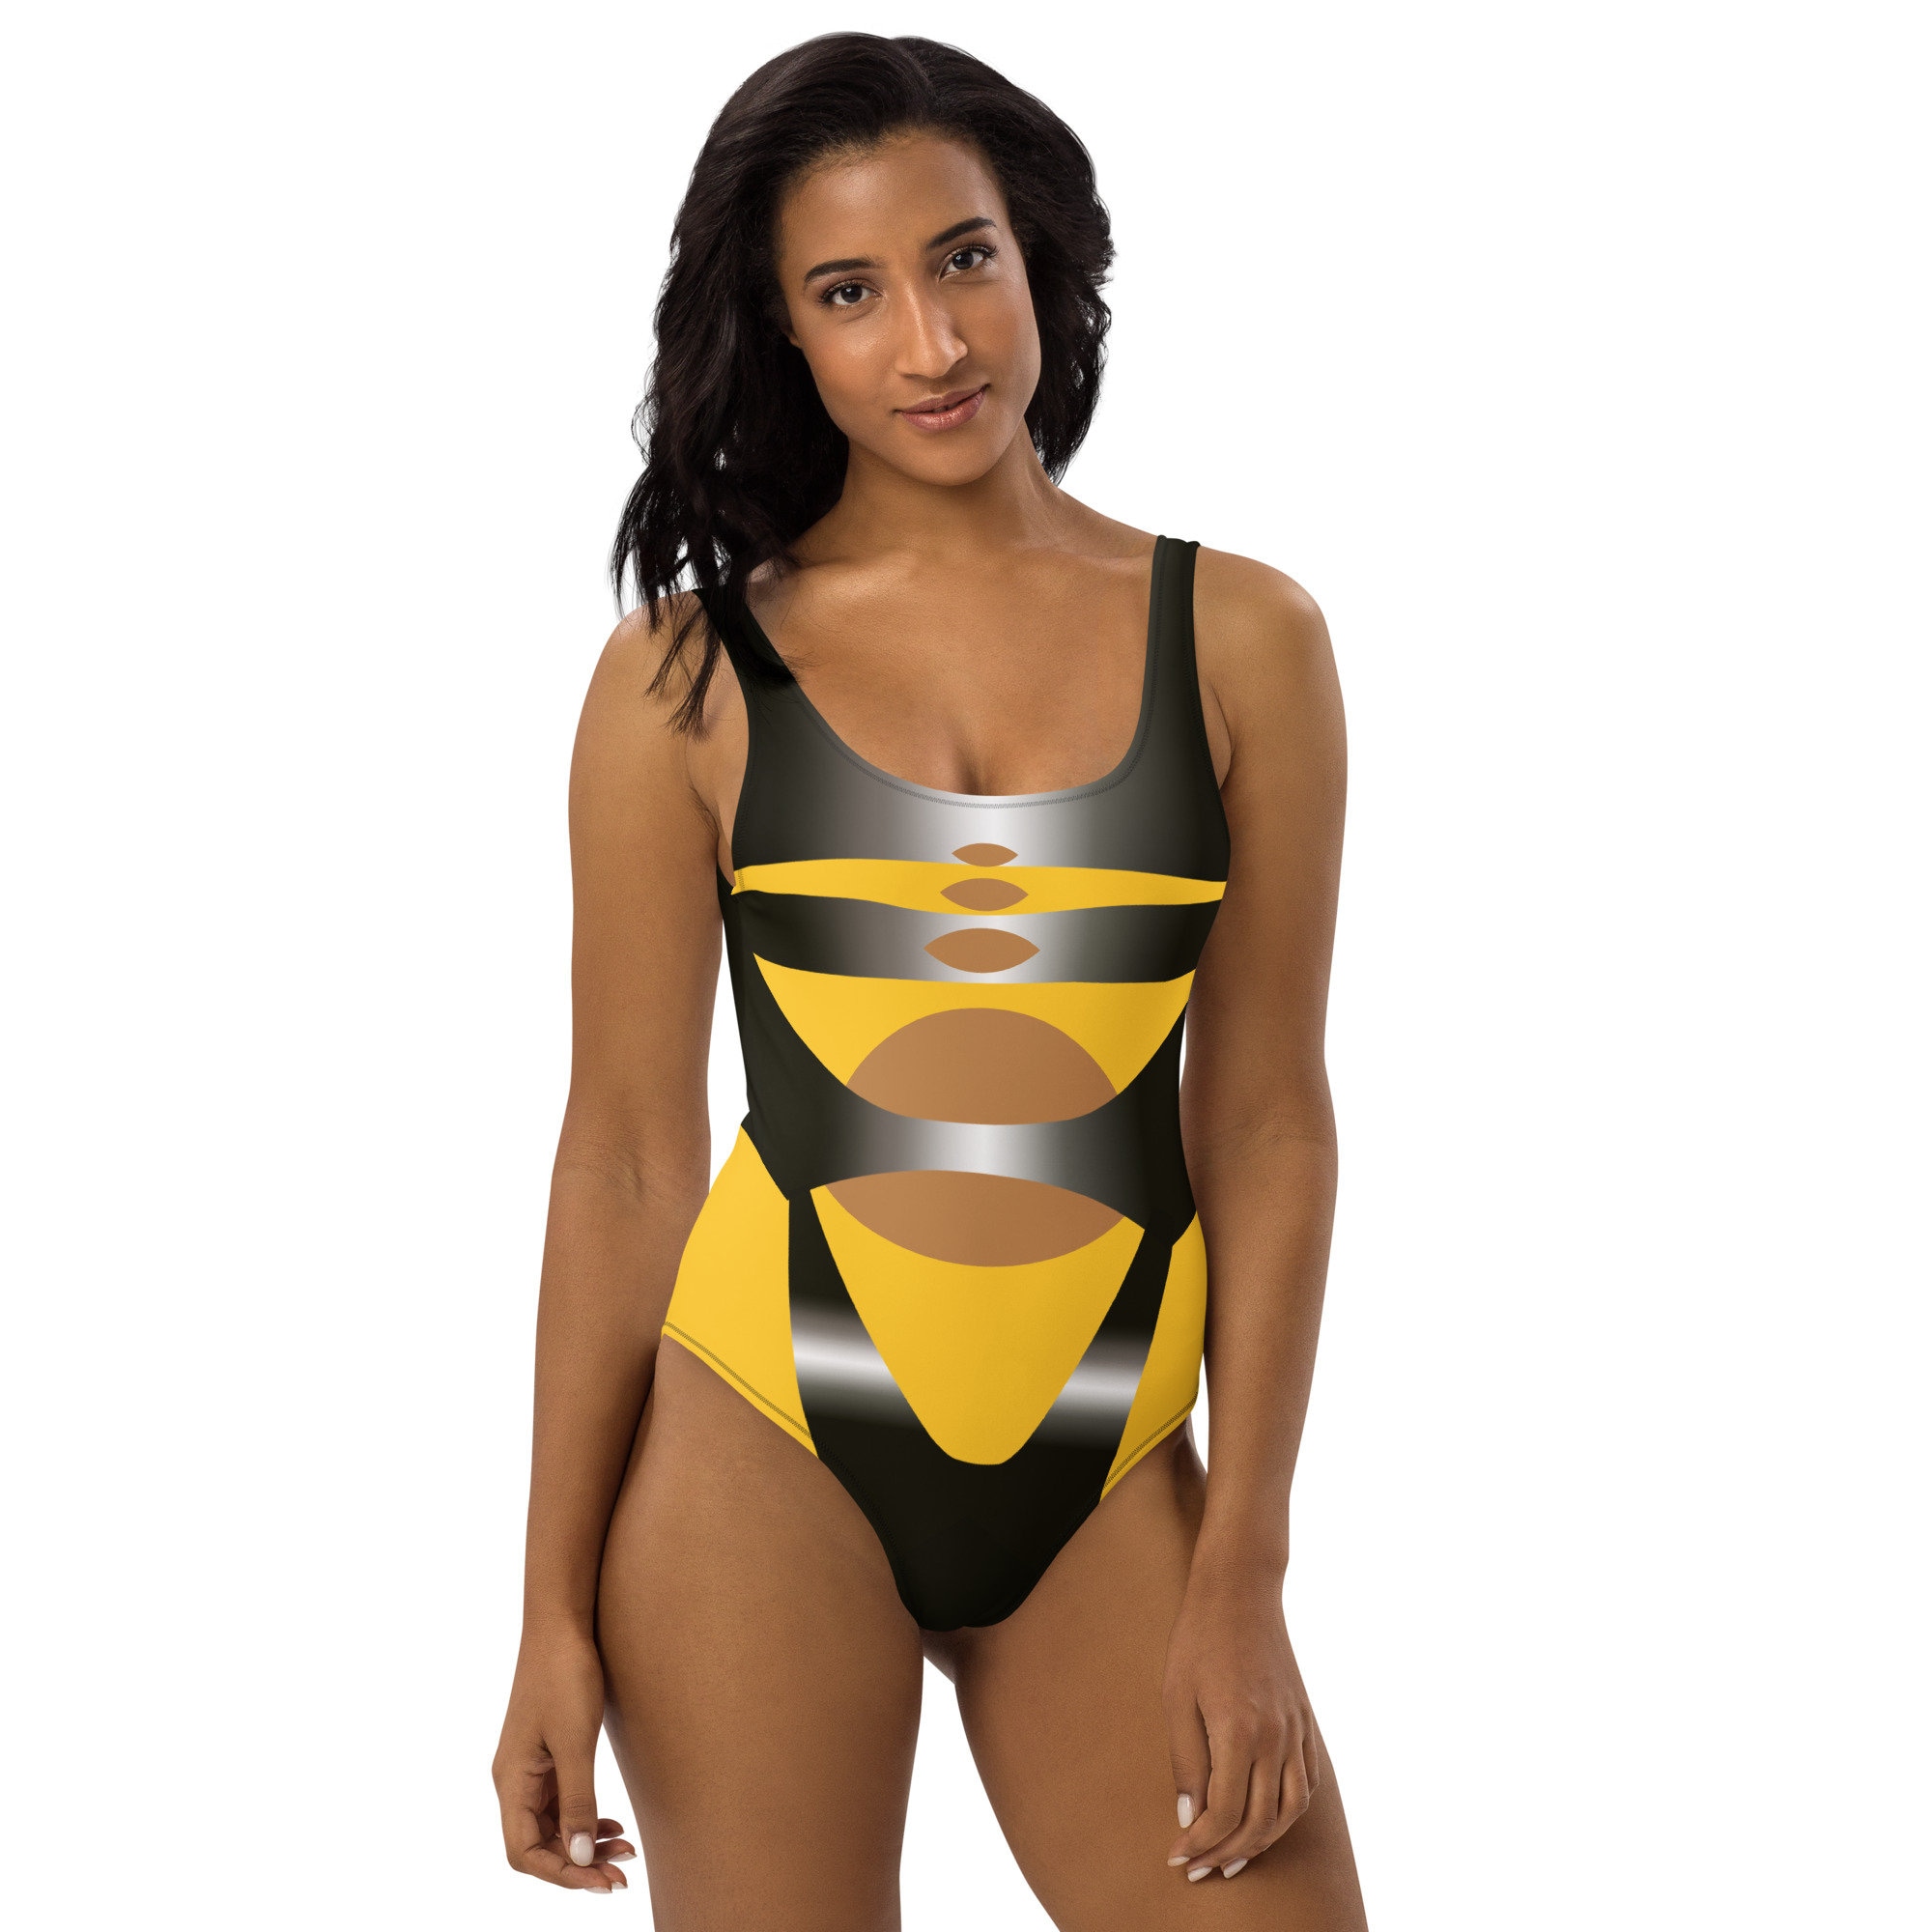 Women Rashguard : Swimsuit one piece Bodysuit Cut Out Long Sleeve